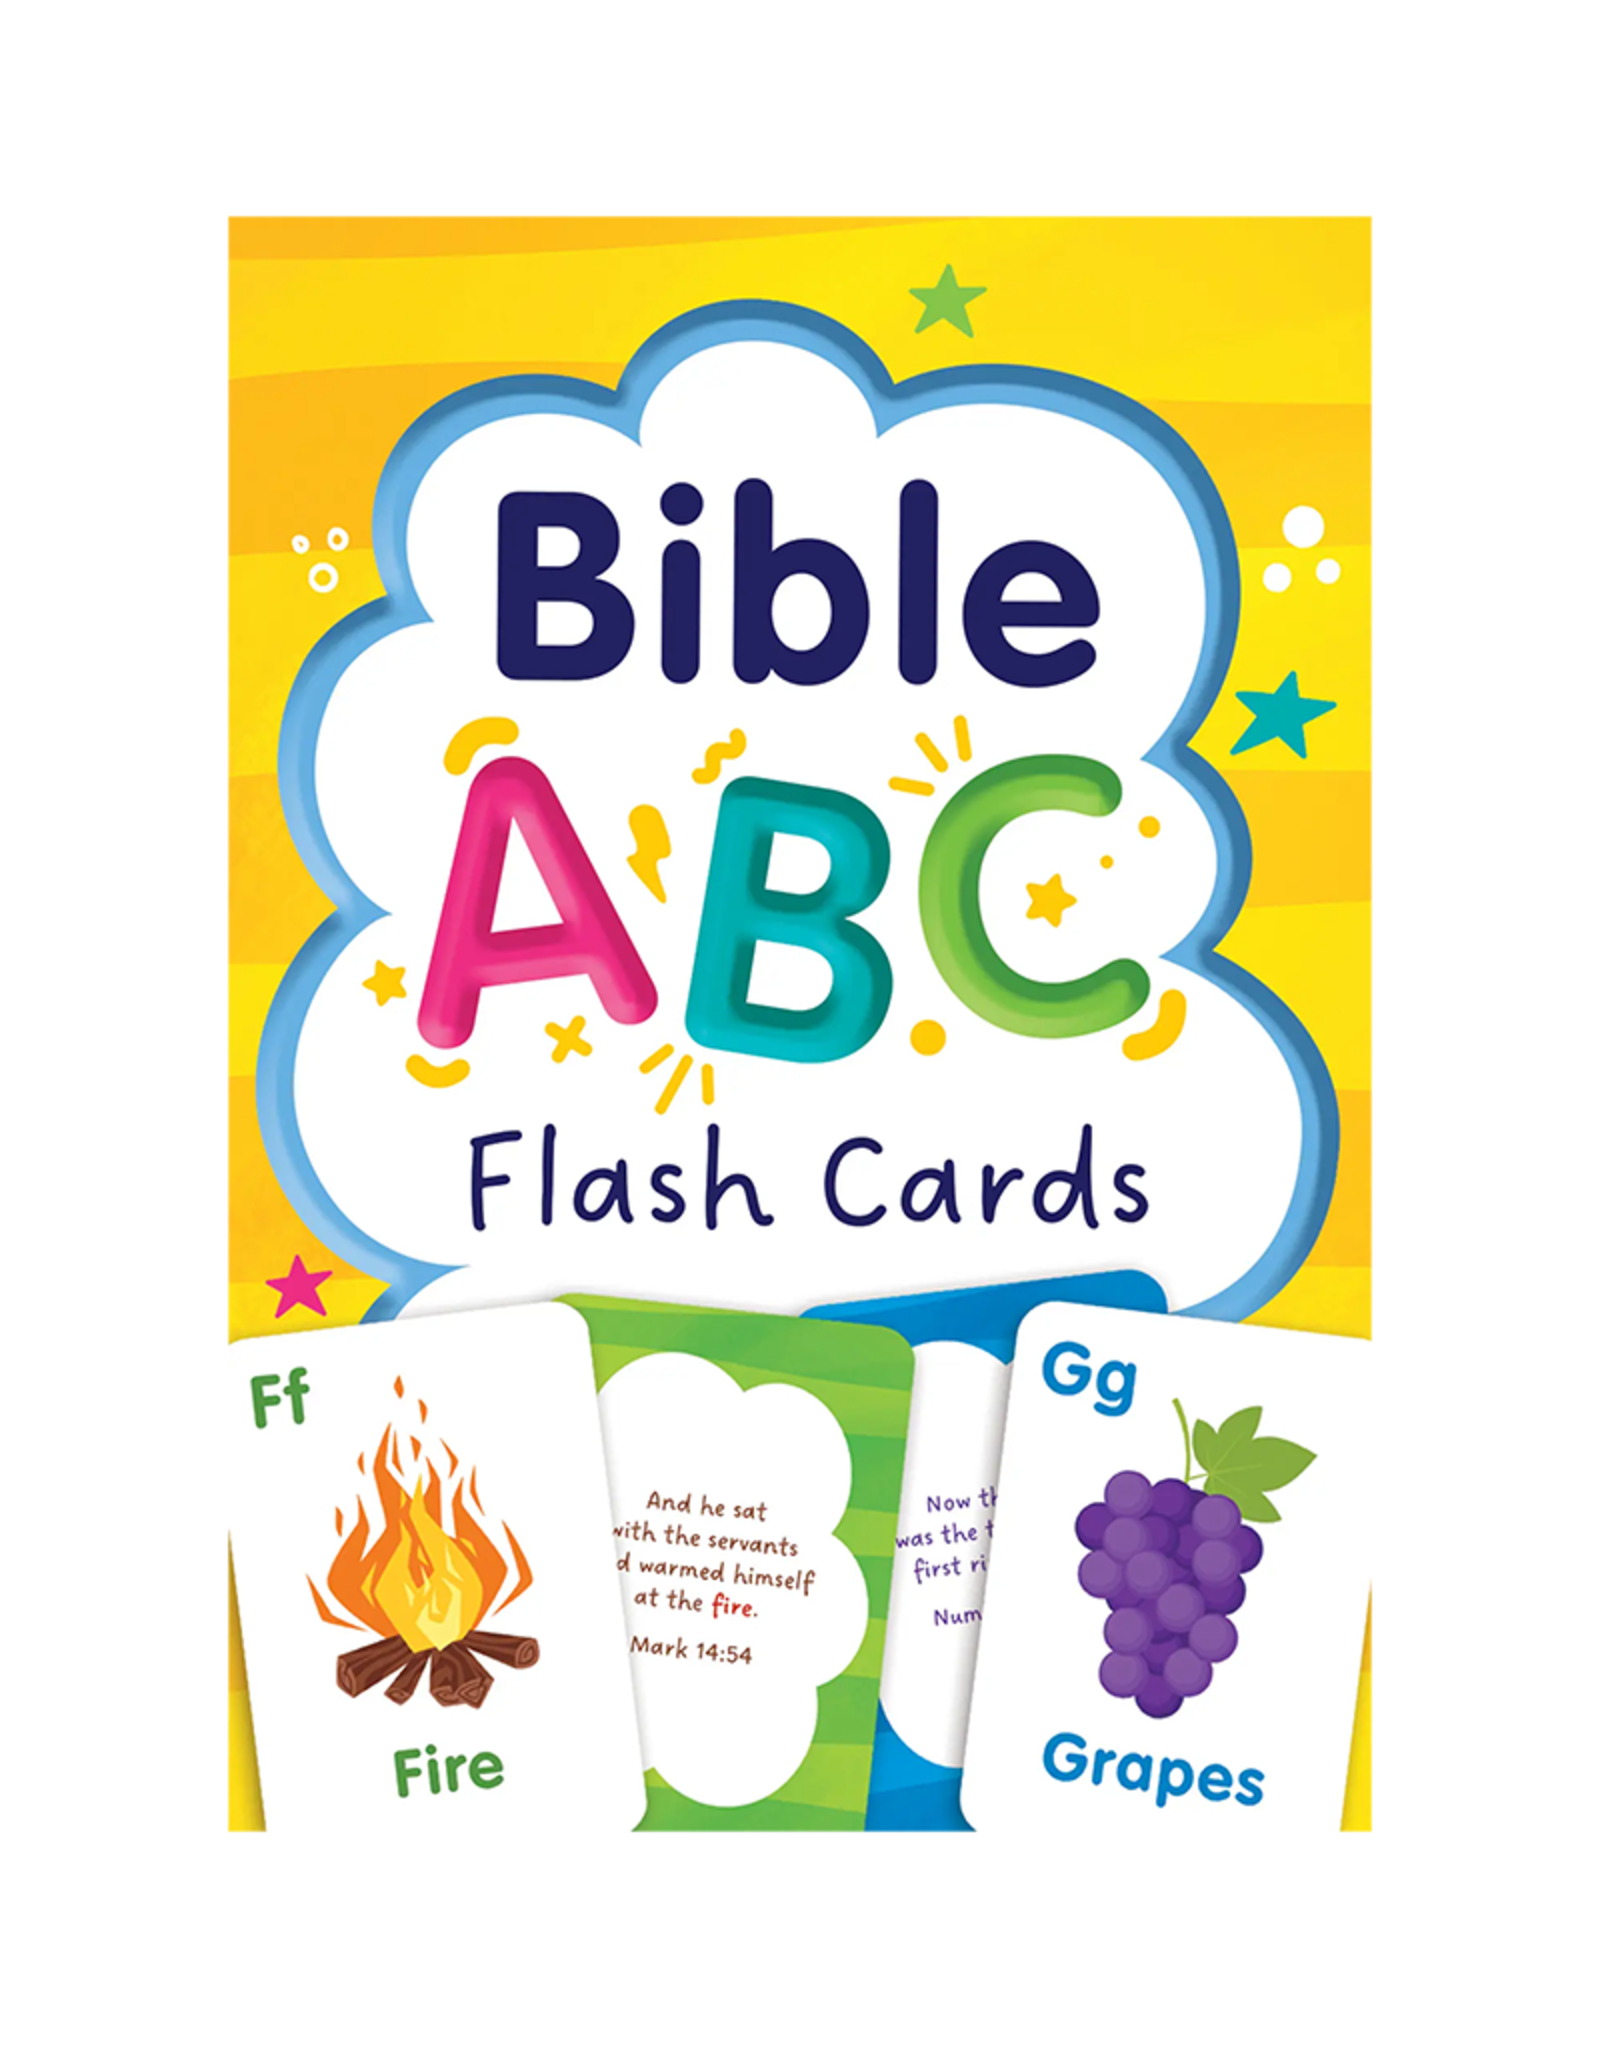 Barbour Publishing Bible ABC Flash Cards